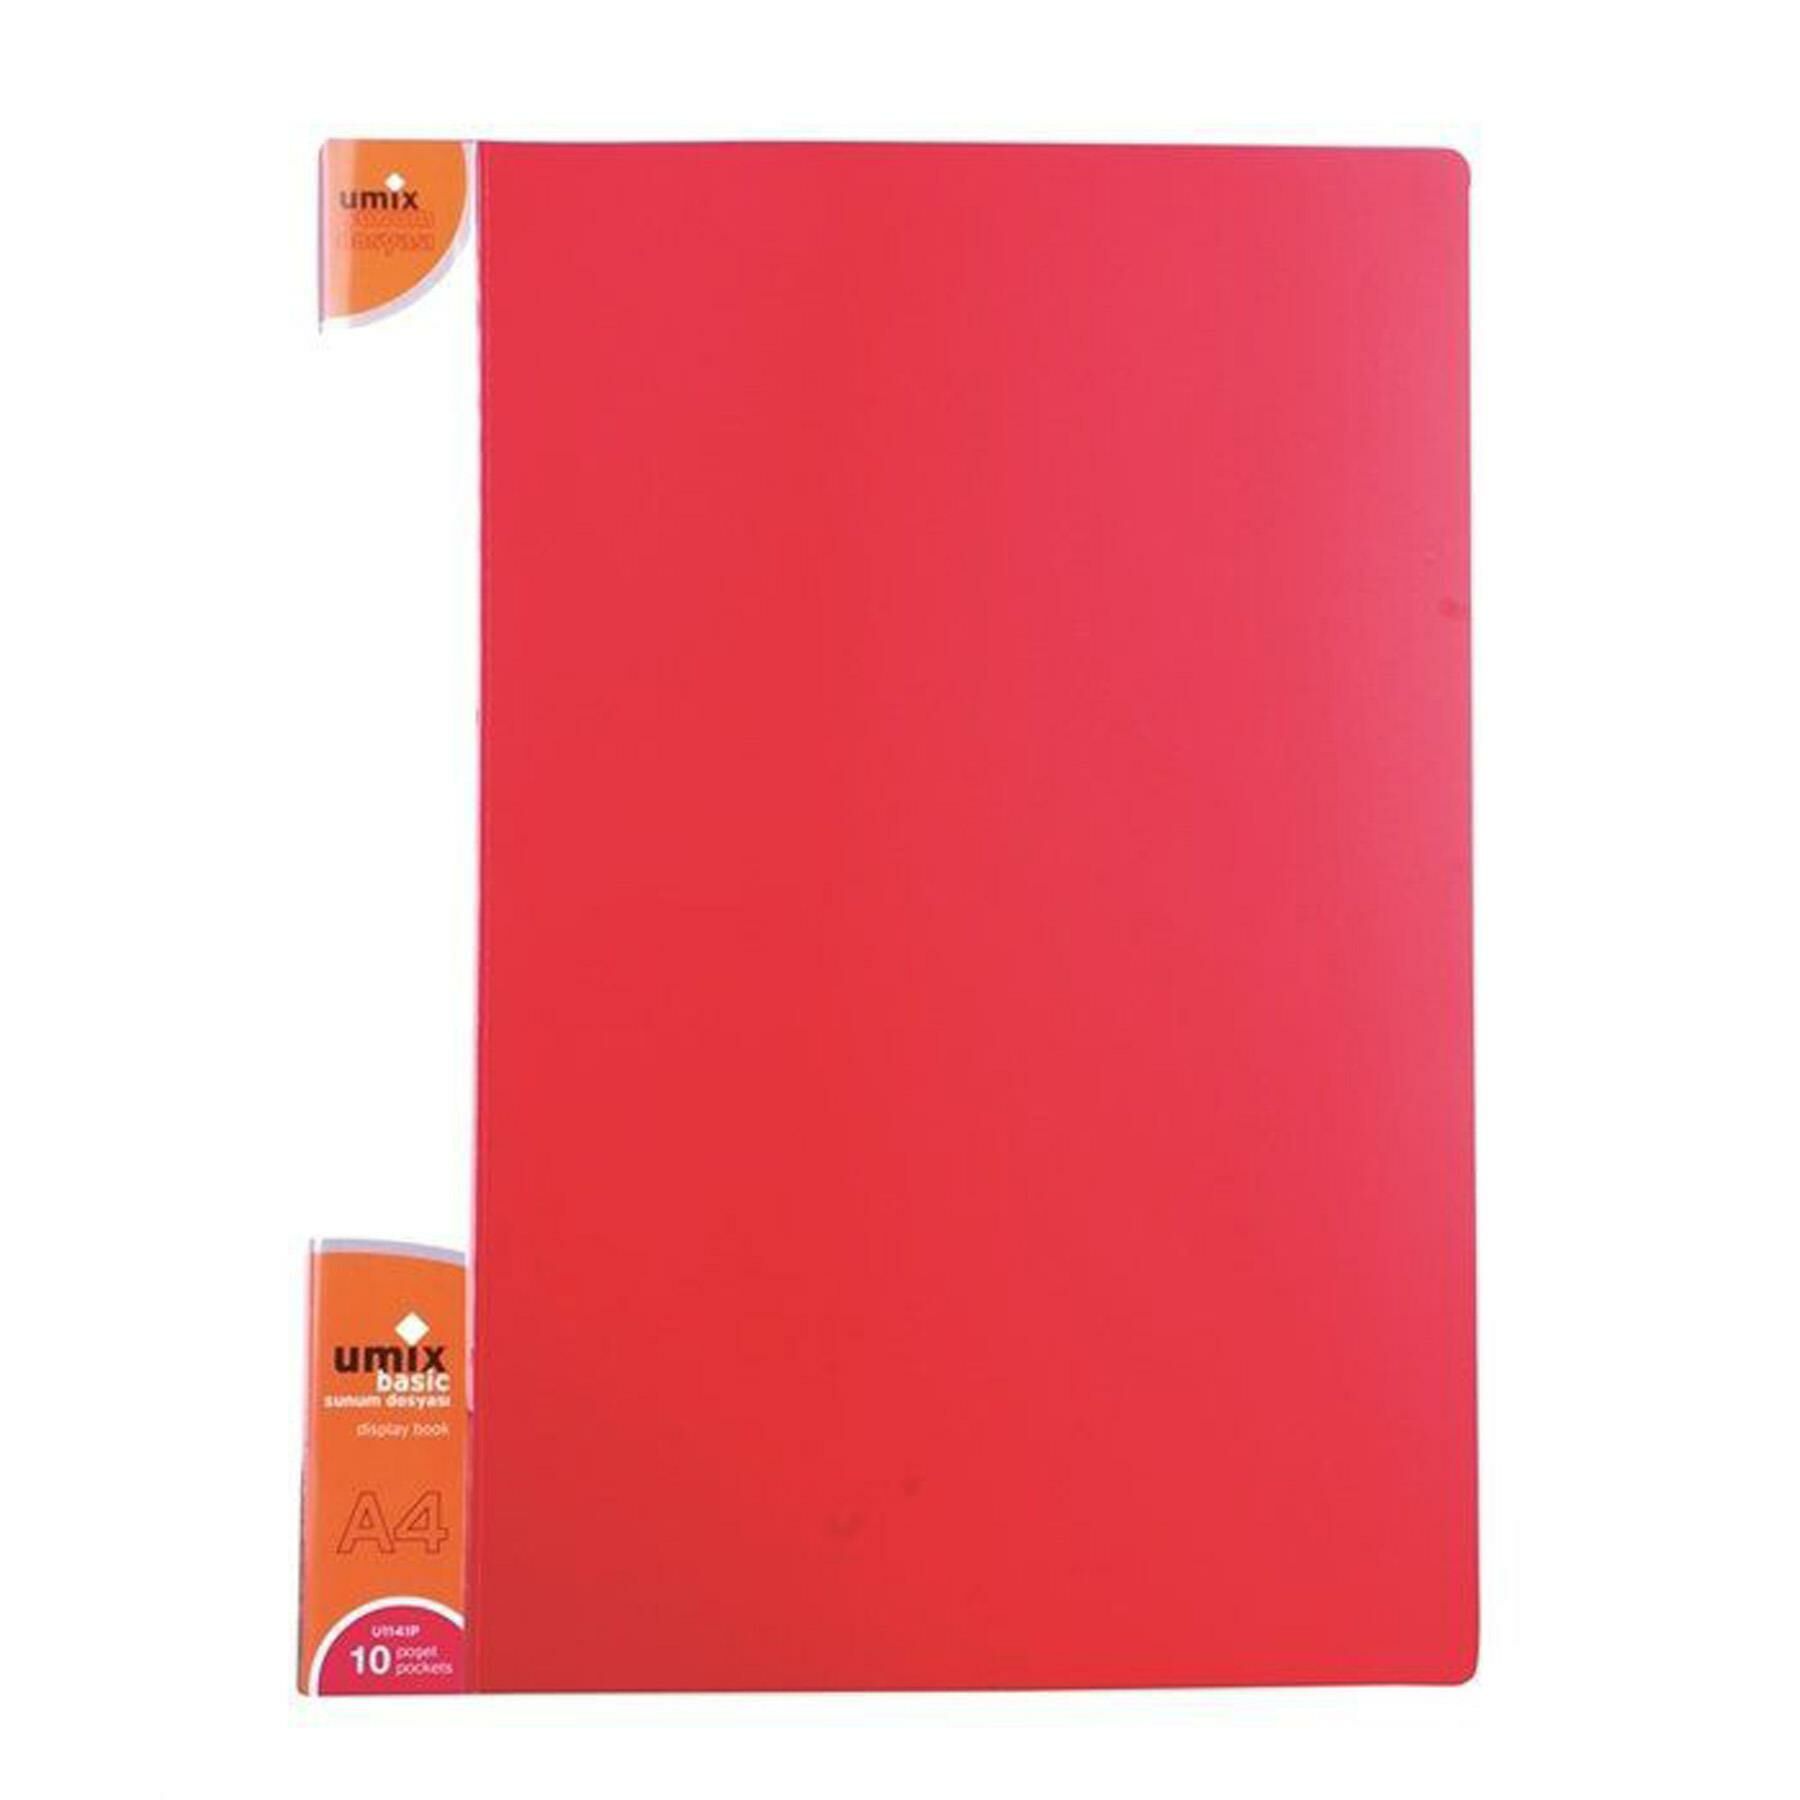 Umix Basic Sunum Dosyası Kırmızı 10lu U1141P-Kı (1 adet)